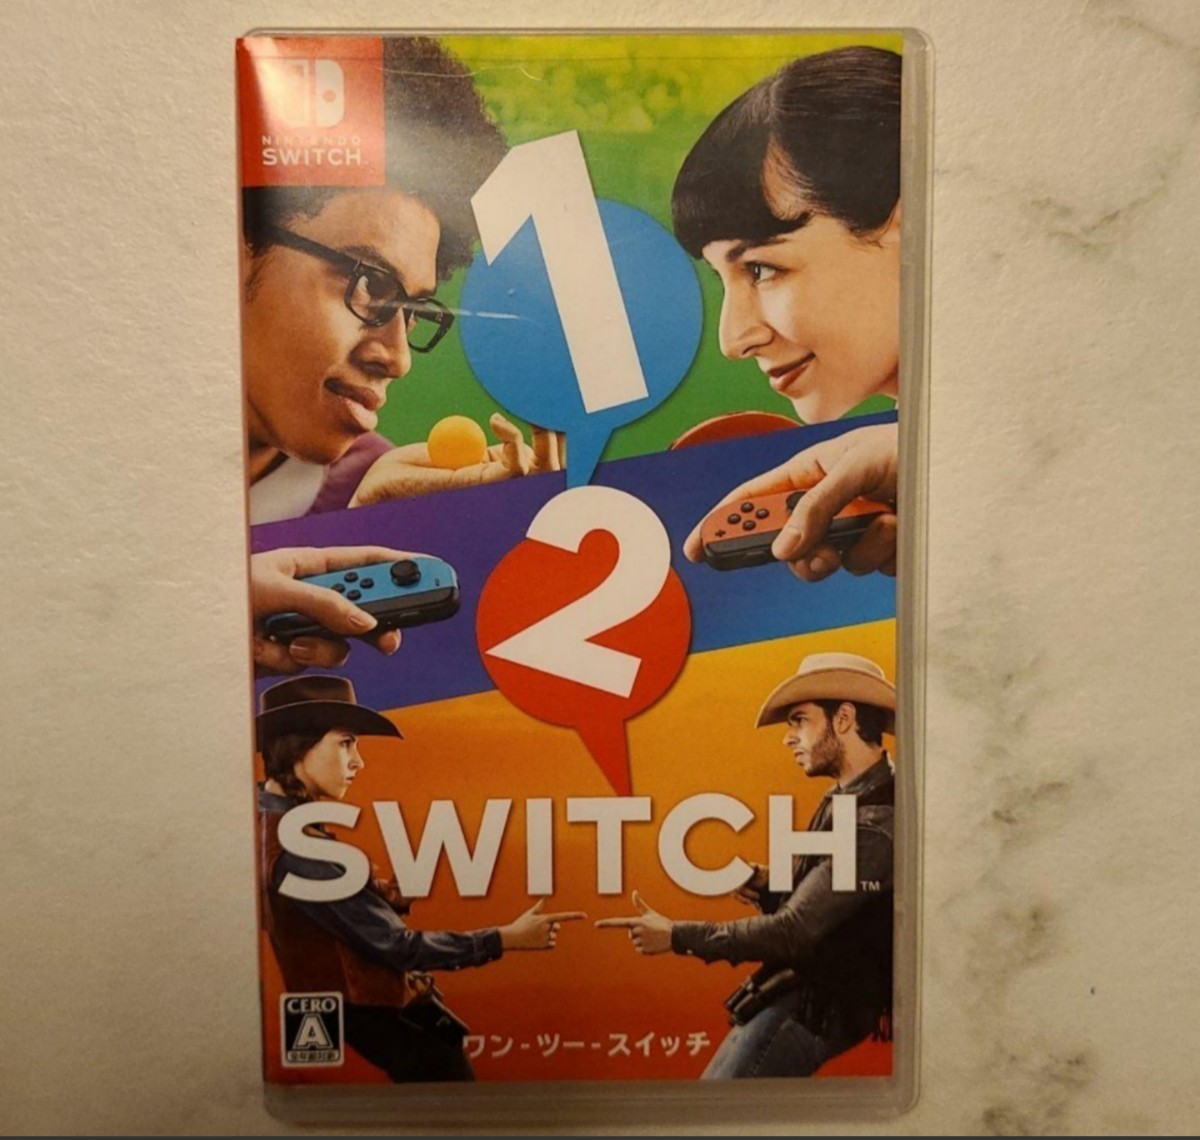 1-2-Switch    Switchソフト  Nintendo Switch   任天堂